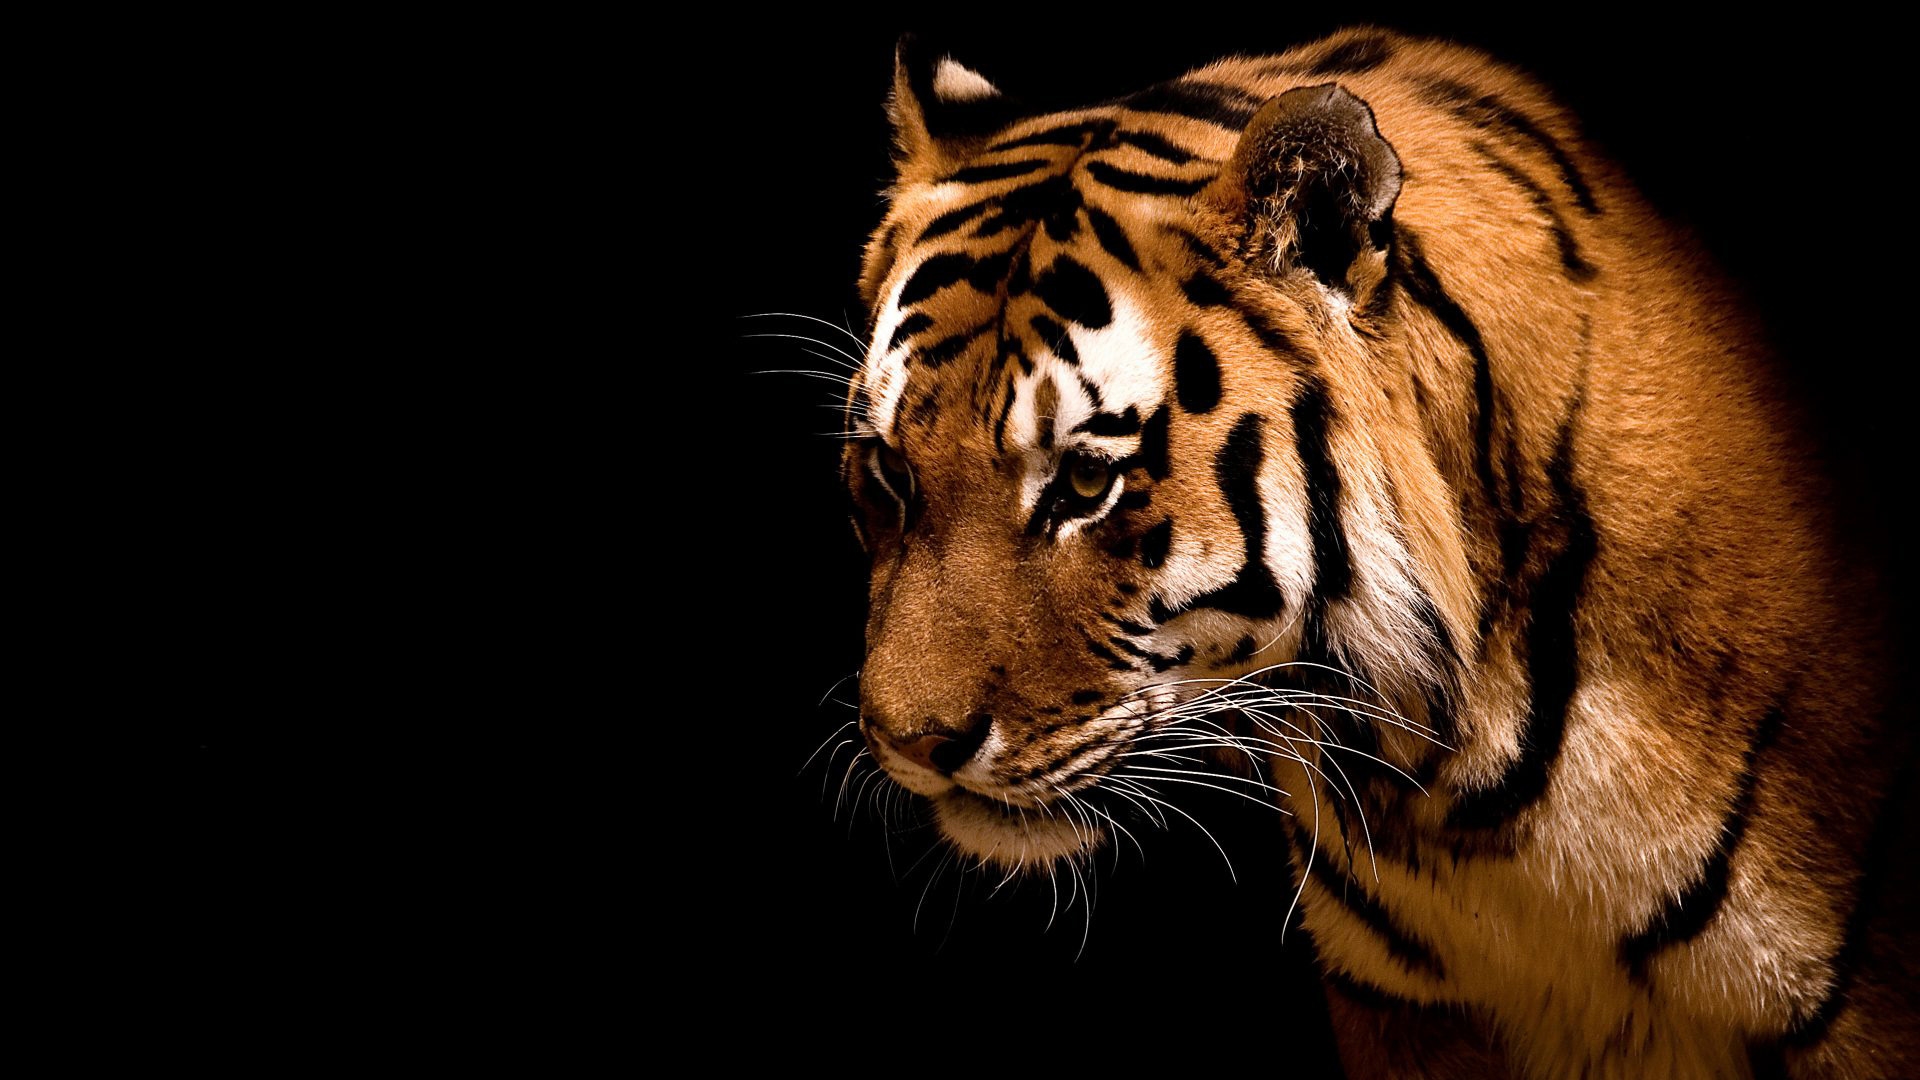 Impressive Tiger for 1920 x 1080 HDTV 1080p resolution